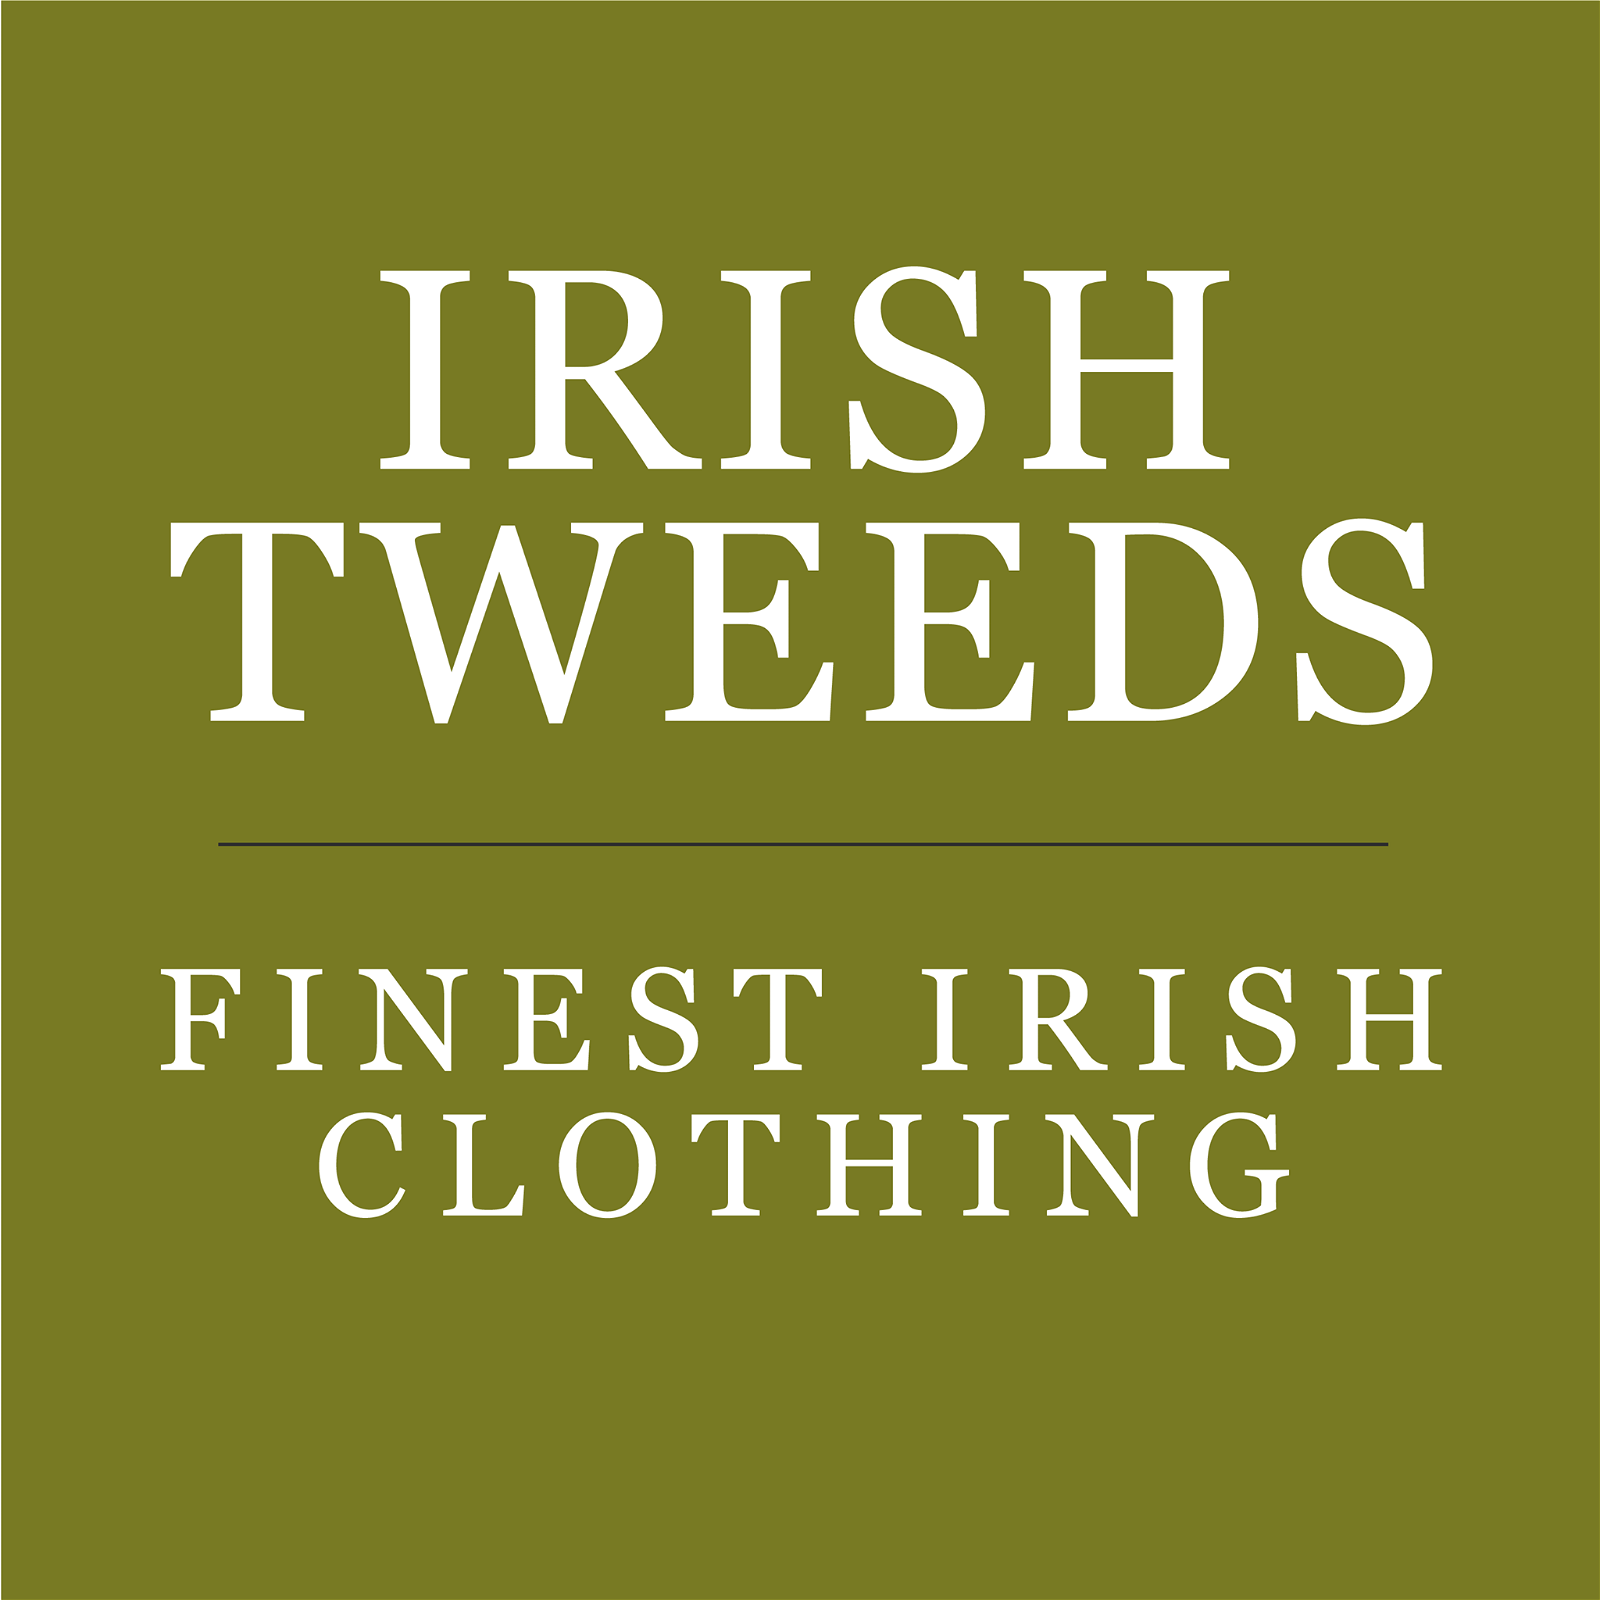 Irish tweeds.com